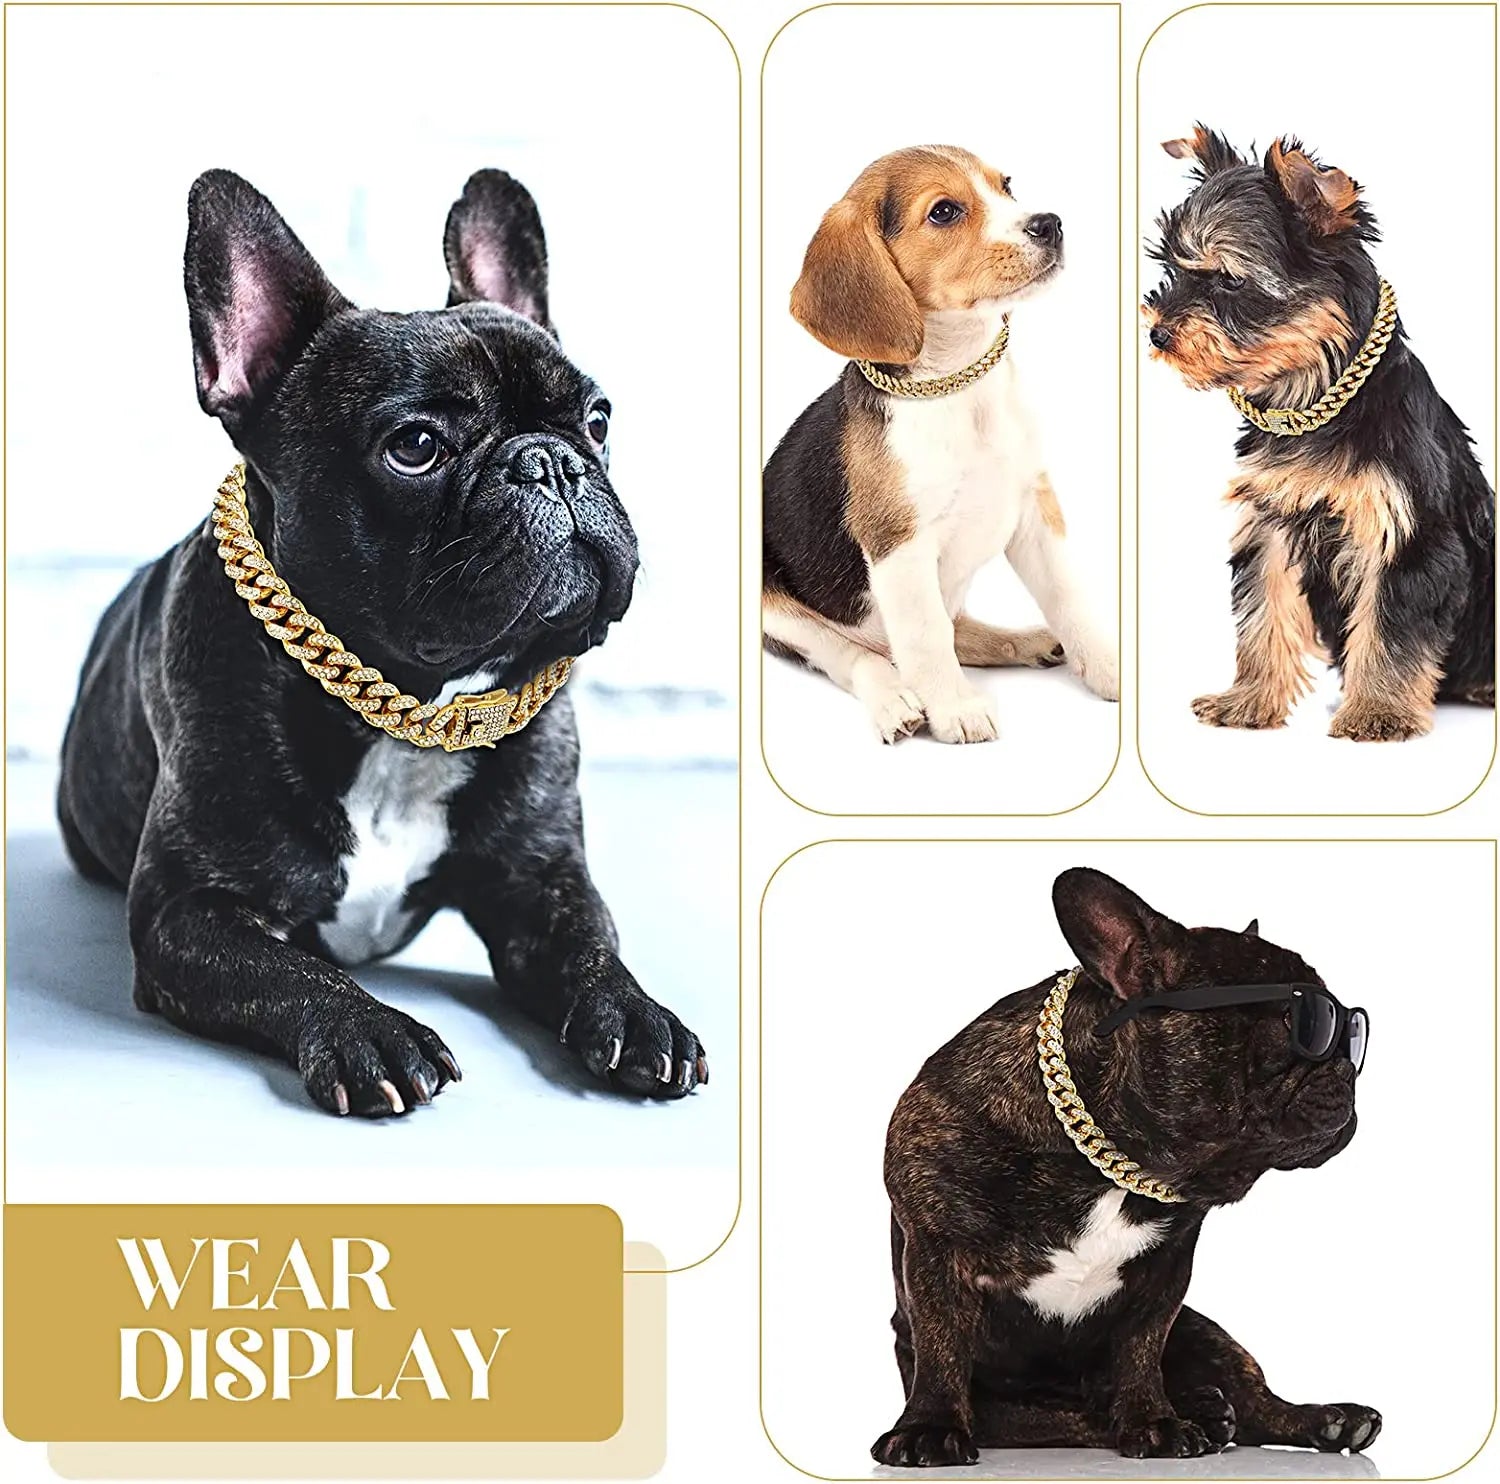 Luxury Dog Chain Collar